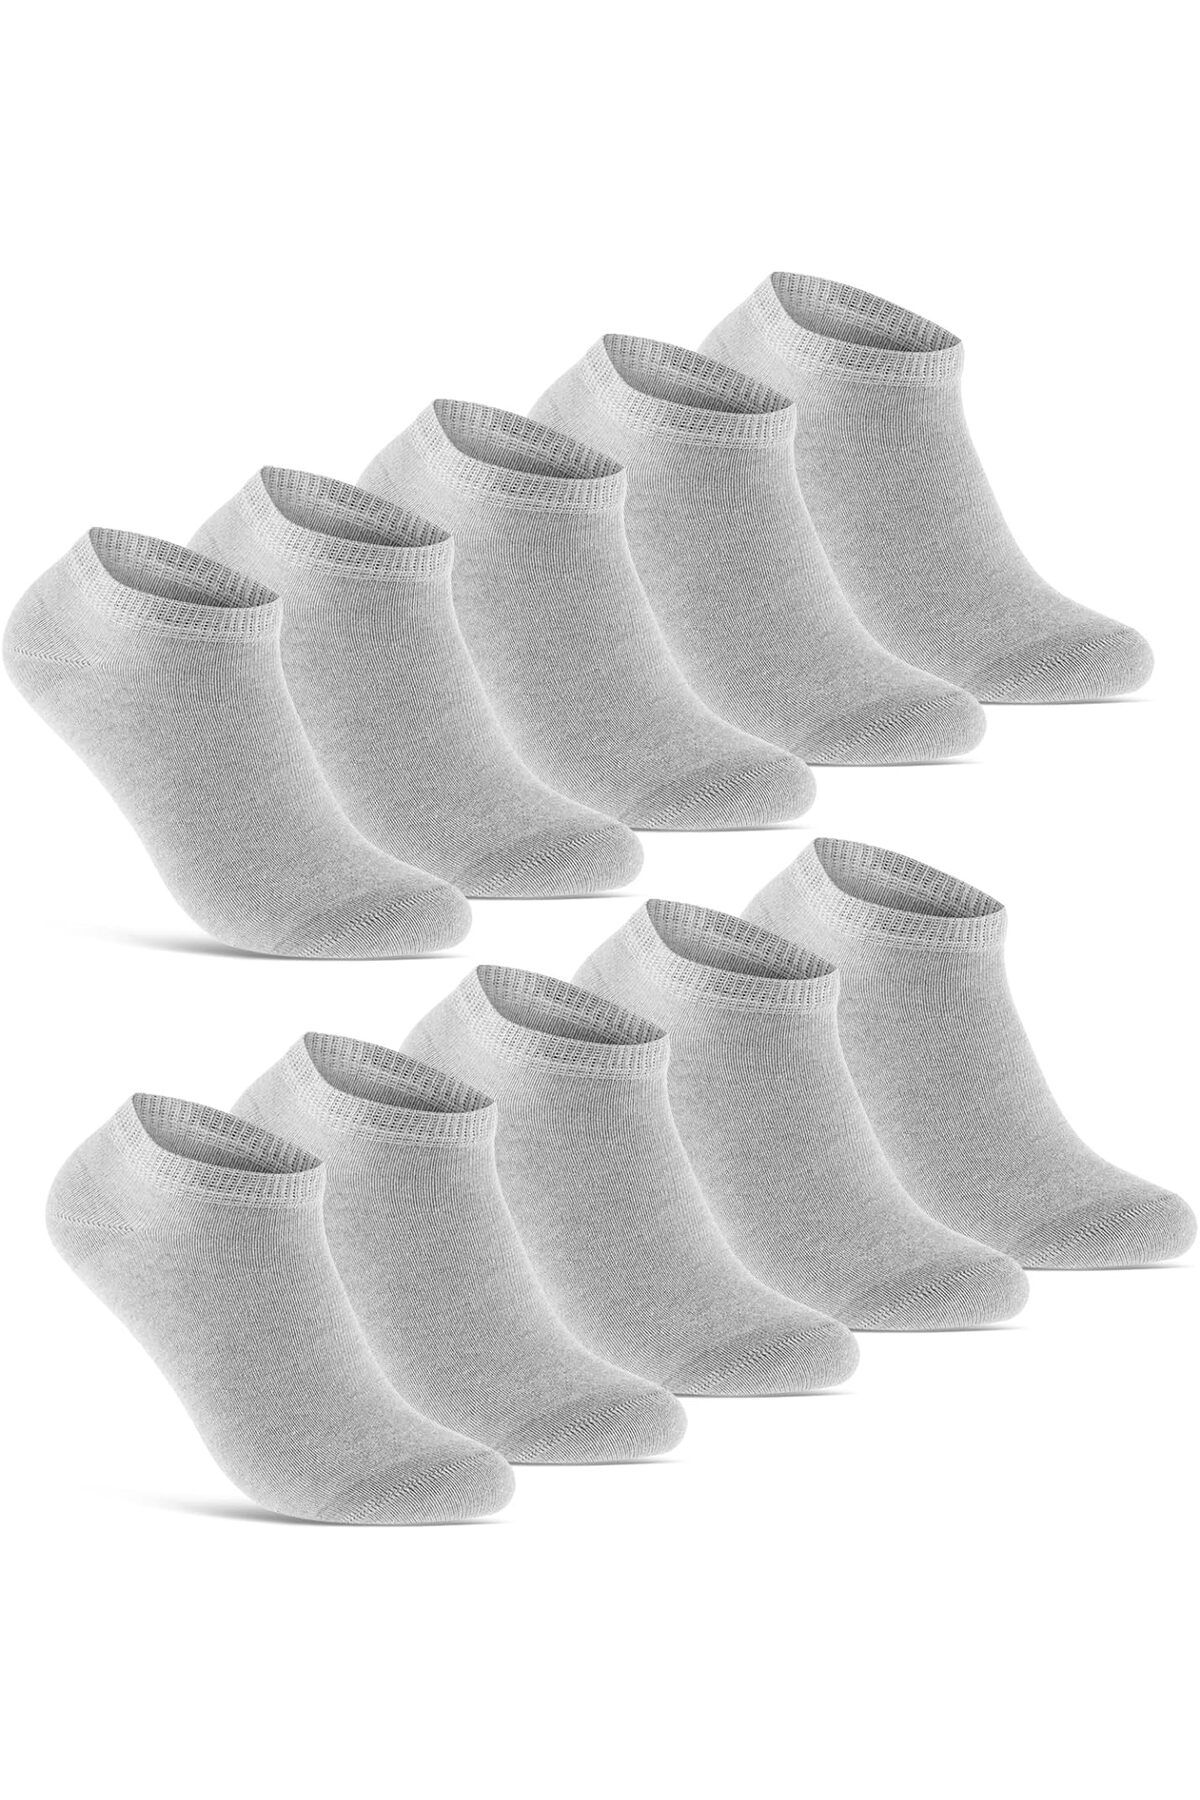 SOCKSHION Pamuklu Patik Bilek Boy Çorap Patik Çorap Gri Renk 10 Çift